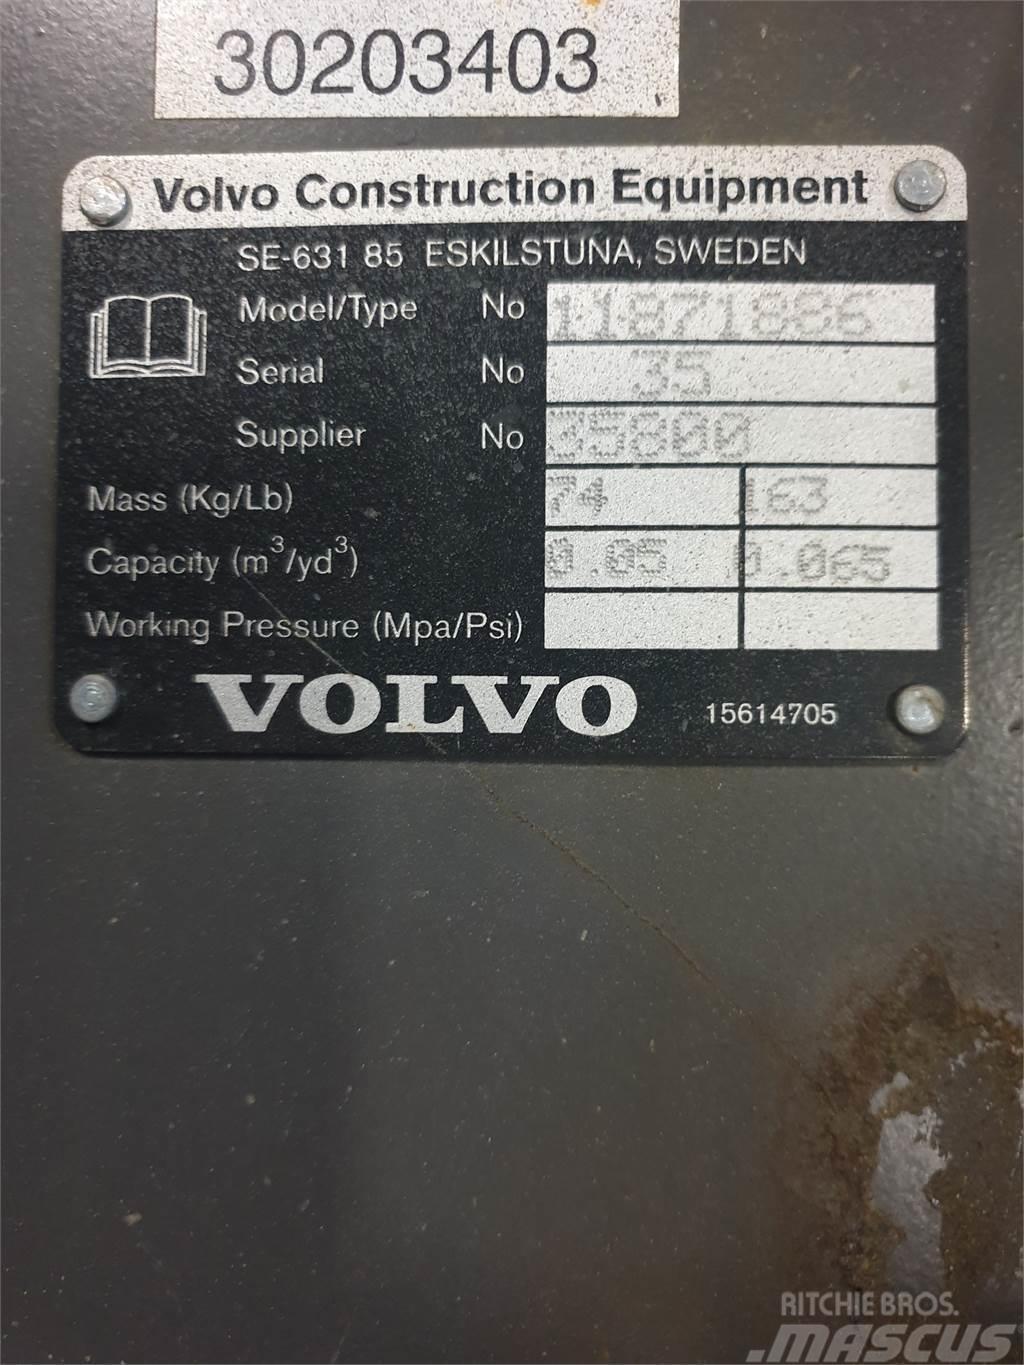 Volvo Kabelskopa S40 300mm Schaufeln